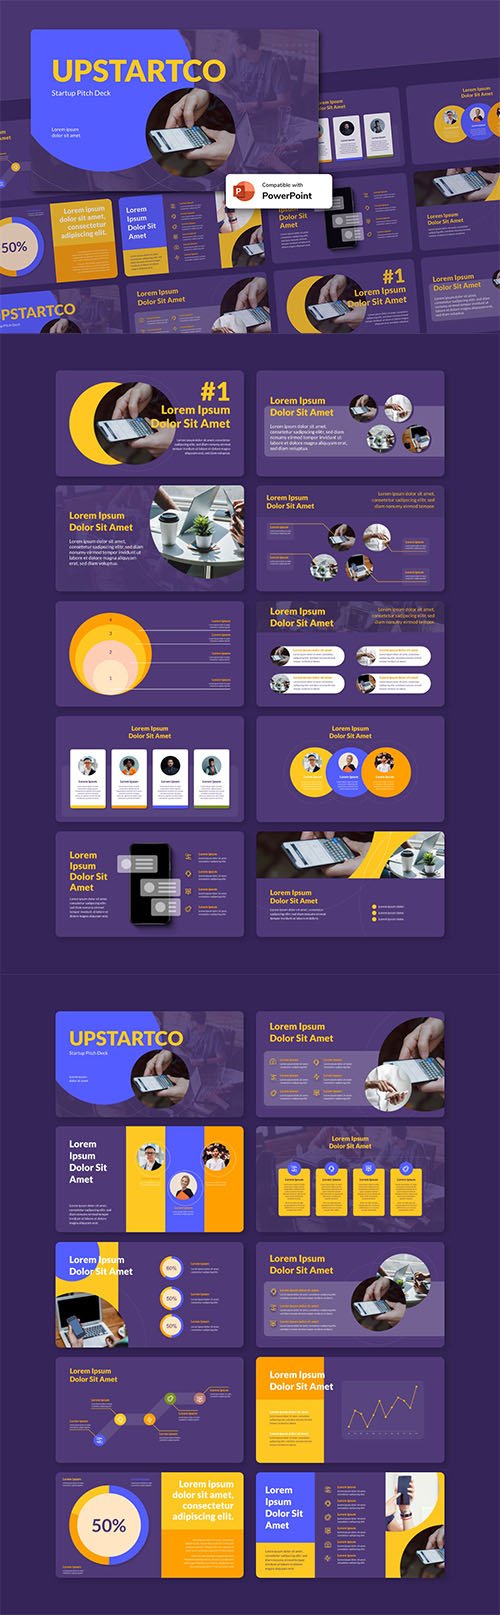 UPSTARTCO - Startup PowerPoint Template